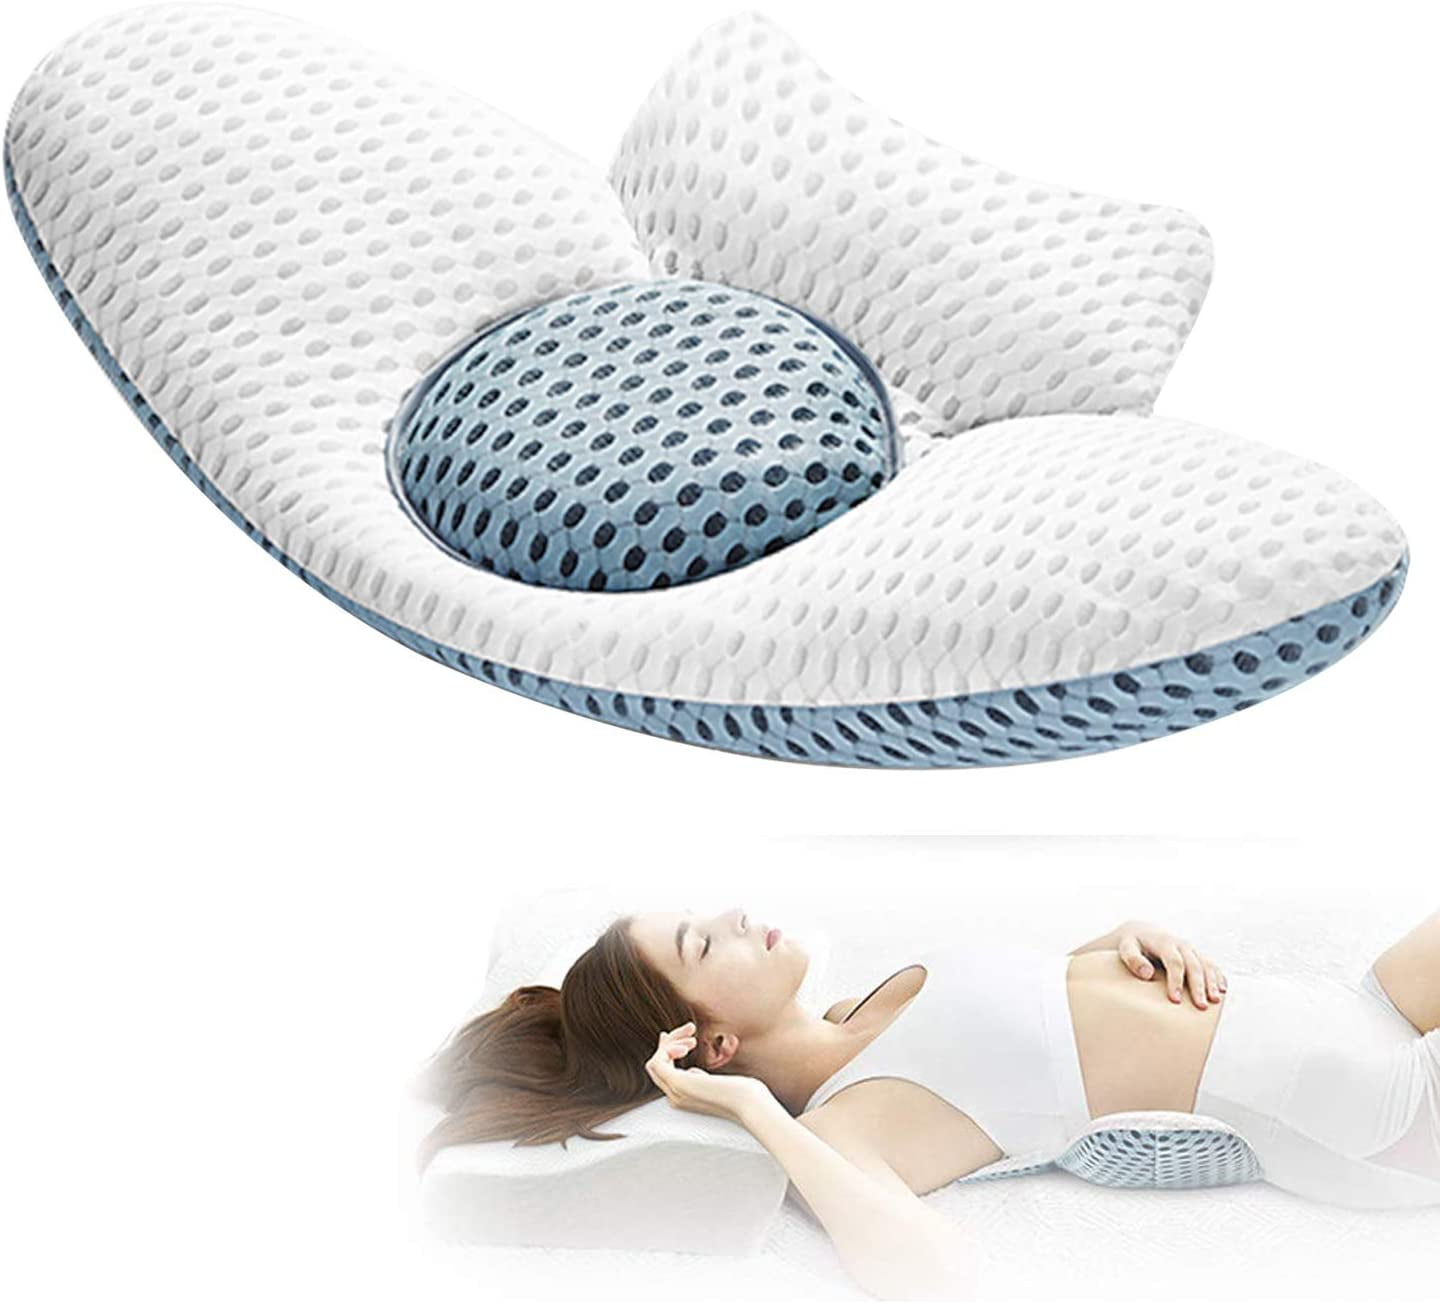 3D Back Support Lumbar Pillow Lumbar Pillow Sleeping Pad Support Pad  Cushion sleeping lumbar support Bedding Sets